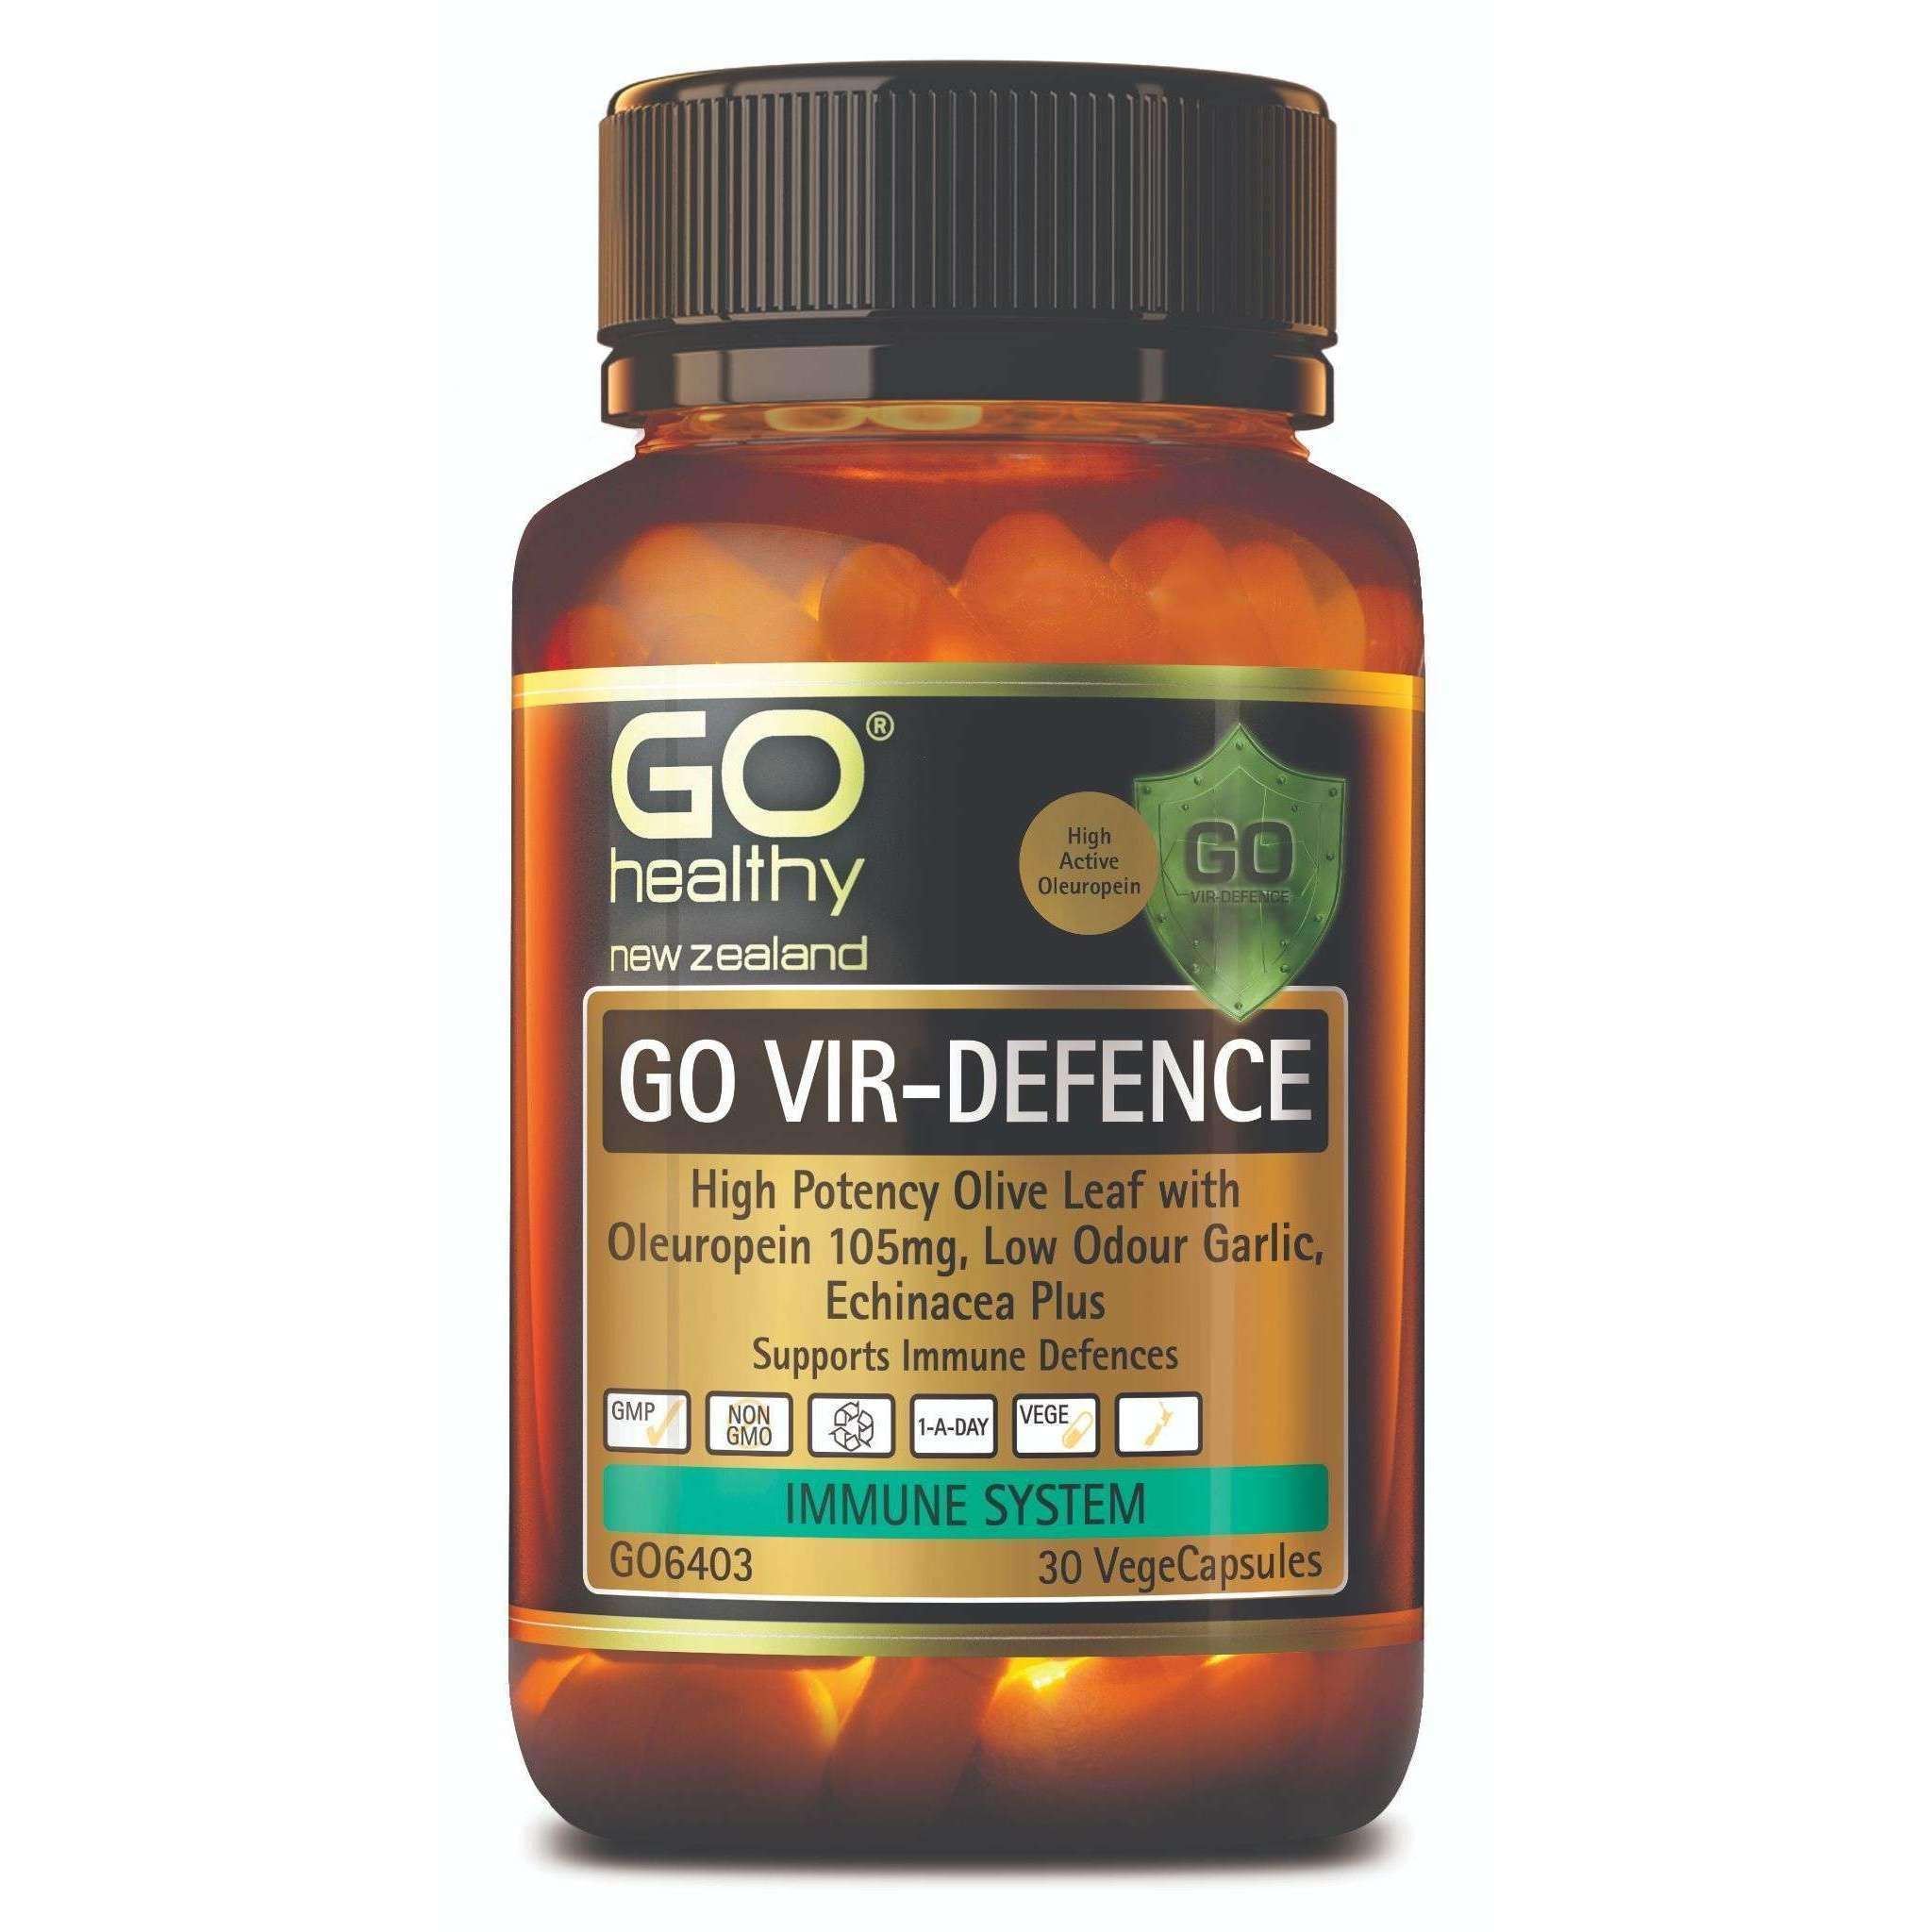 Go Healthy Go Vir-Defence